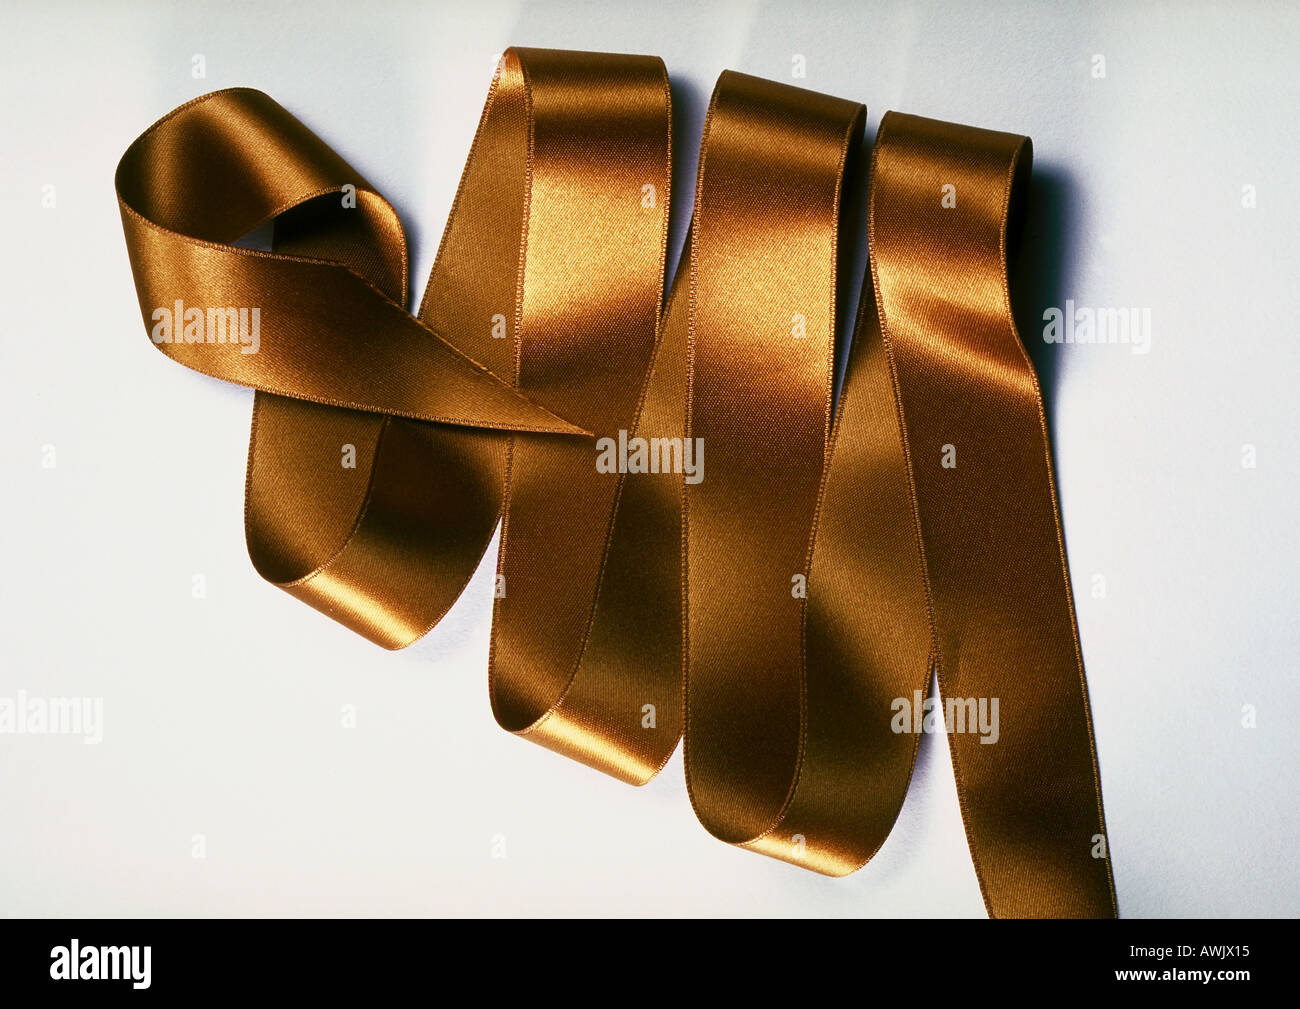 Ruban de couleur bronze Photo Stock - Alamy